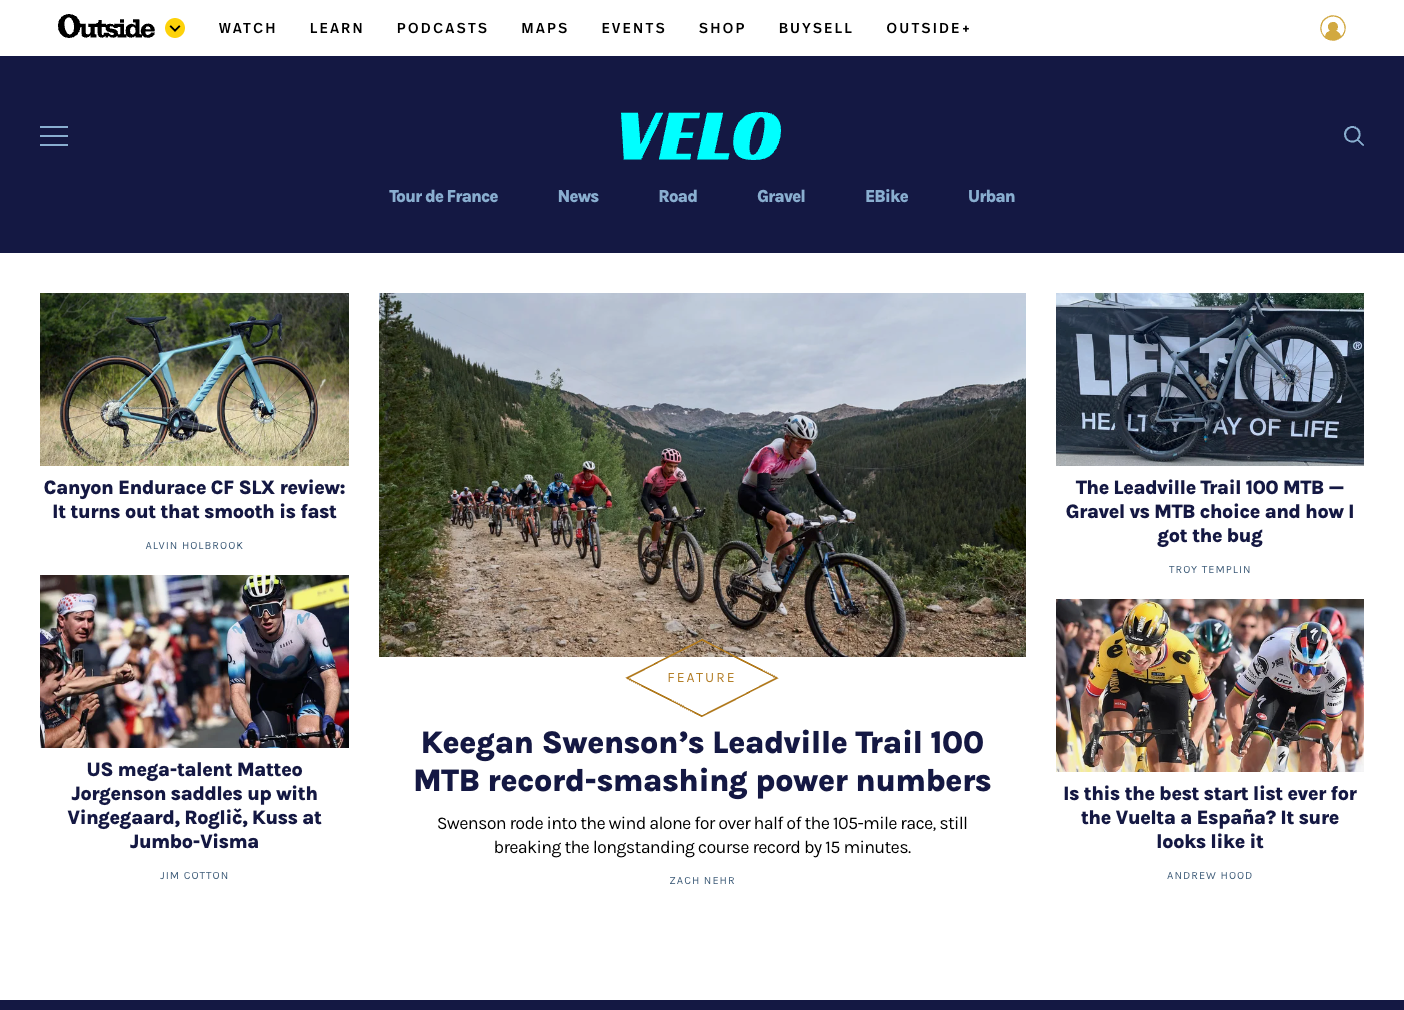 VELO website home page design